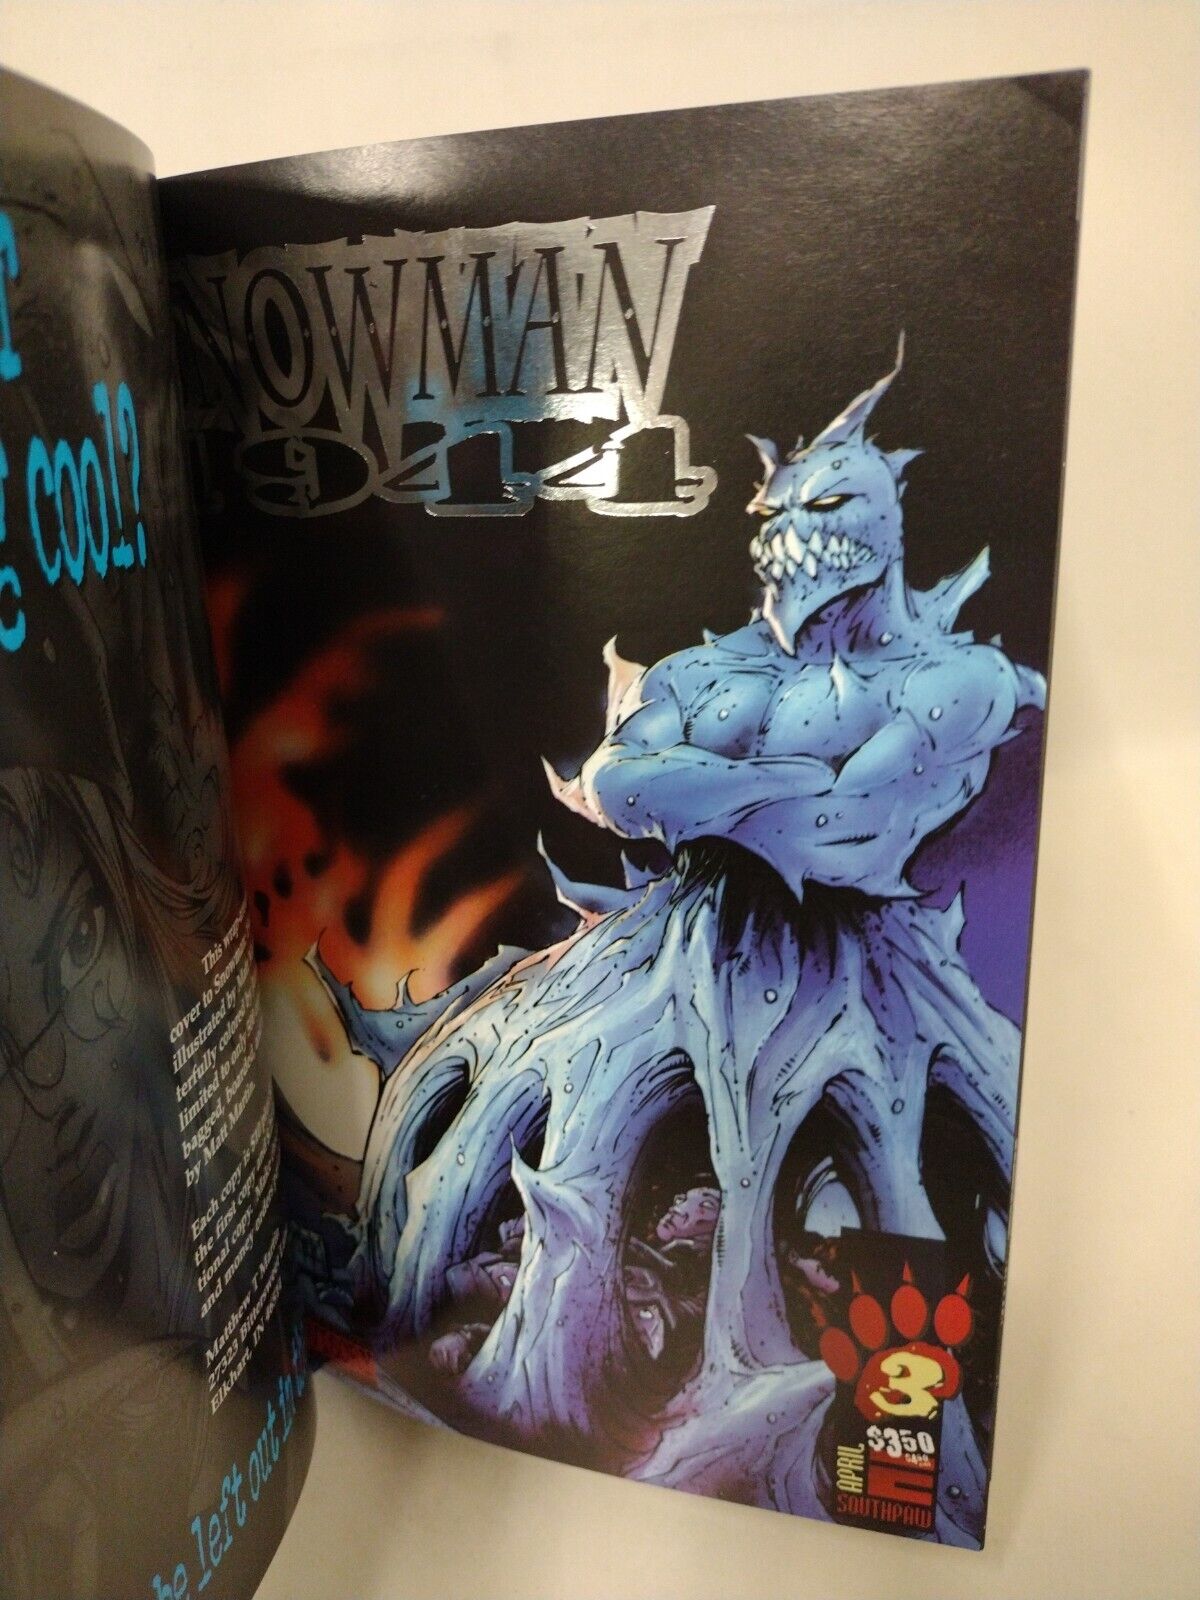 Matt Martin's Snowman (1995-1999) Omnibus ARG Custom Bound Horror Comics HC New